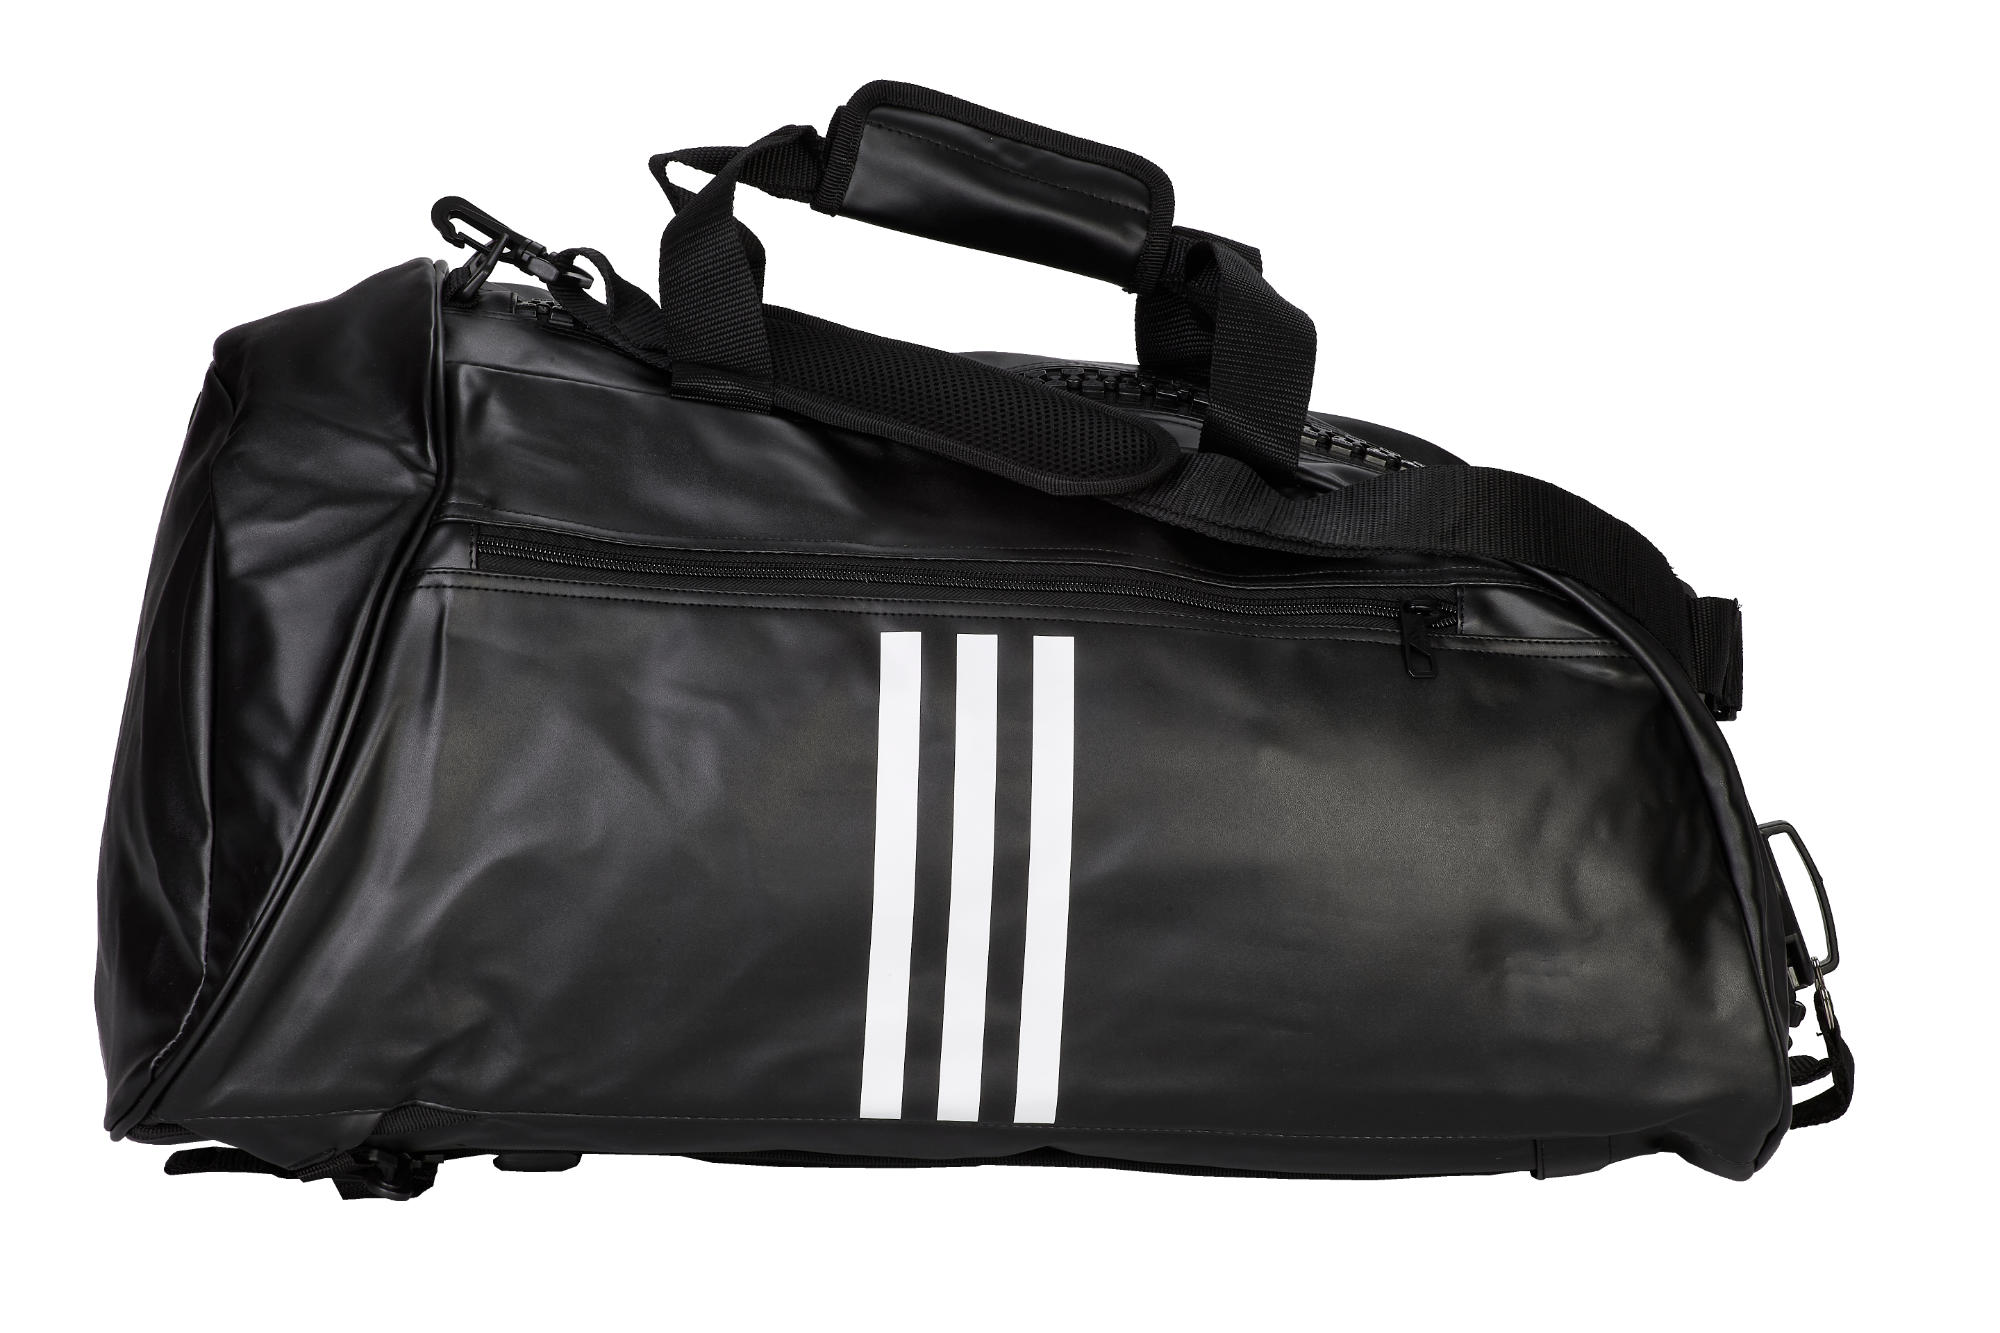 adidas 2in1 Bag Combat Sports black/white PU, adiACC051